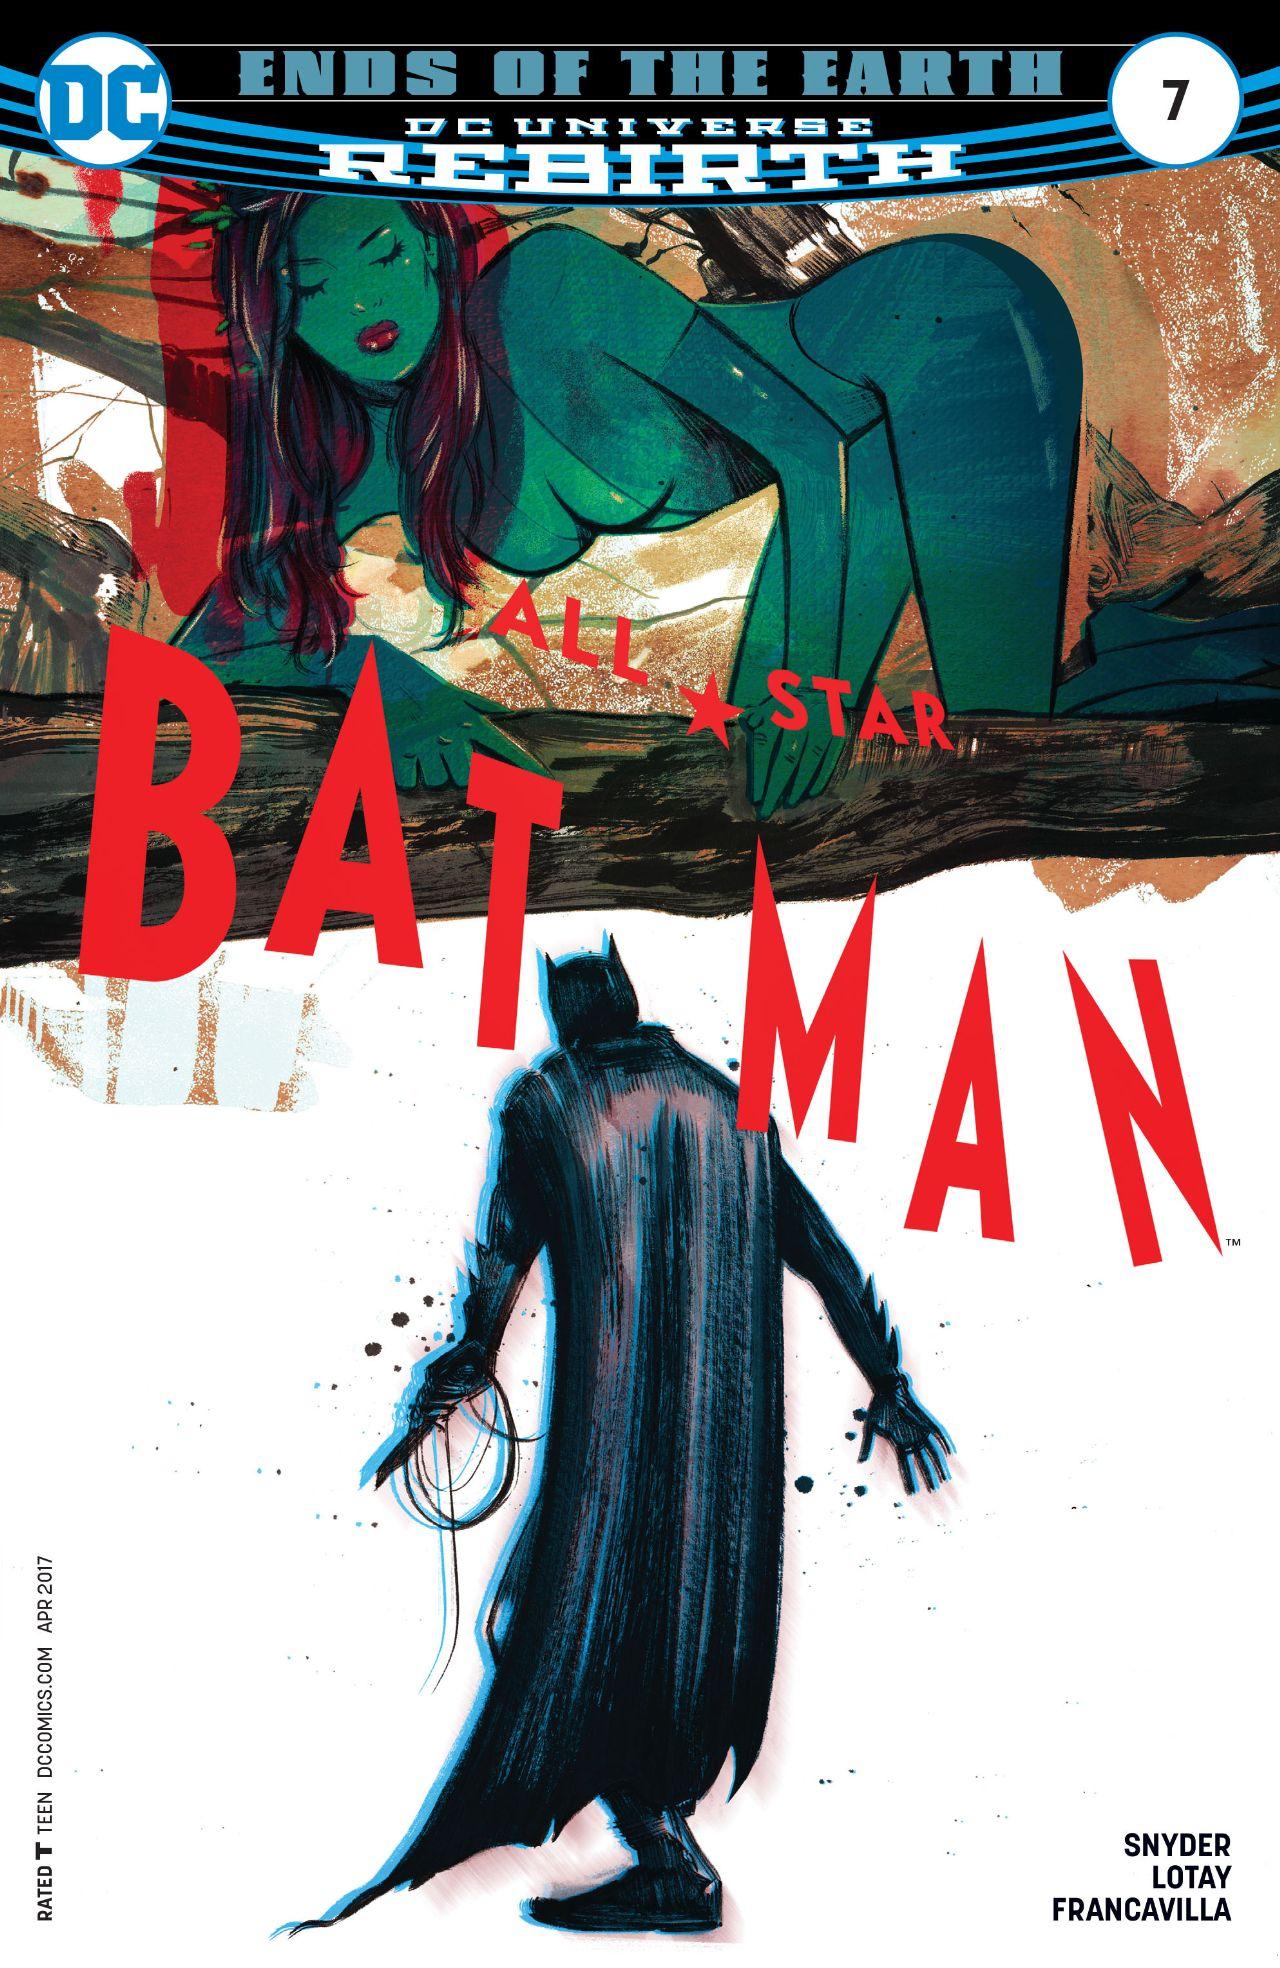 All-Star Batman Vol. 1 #7